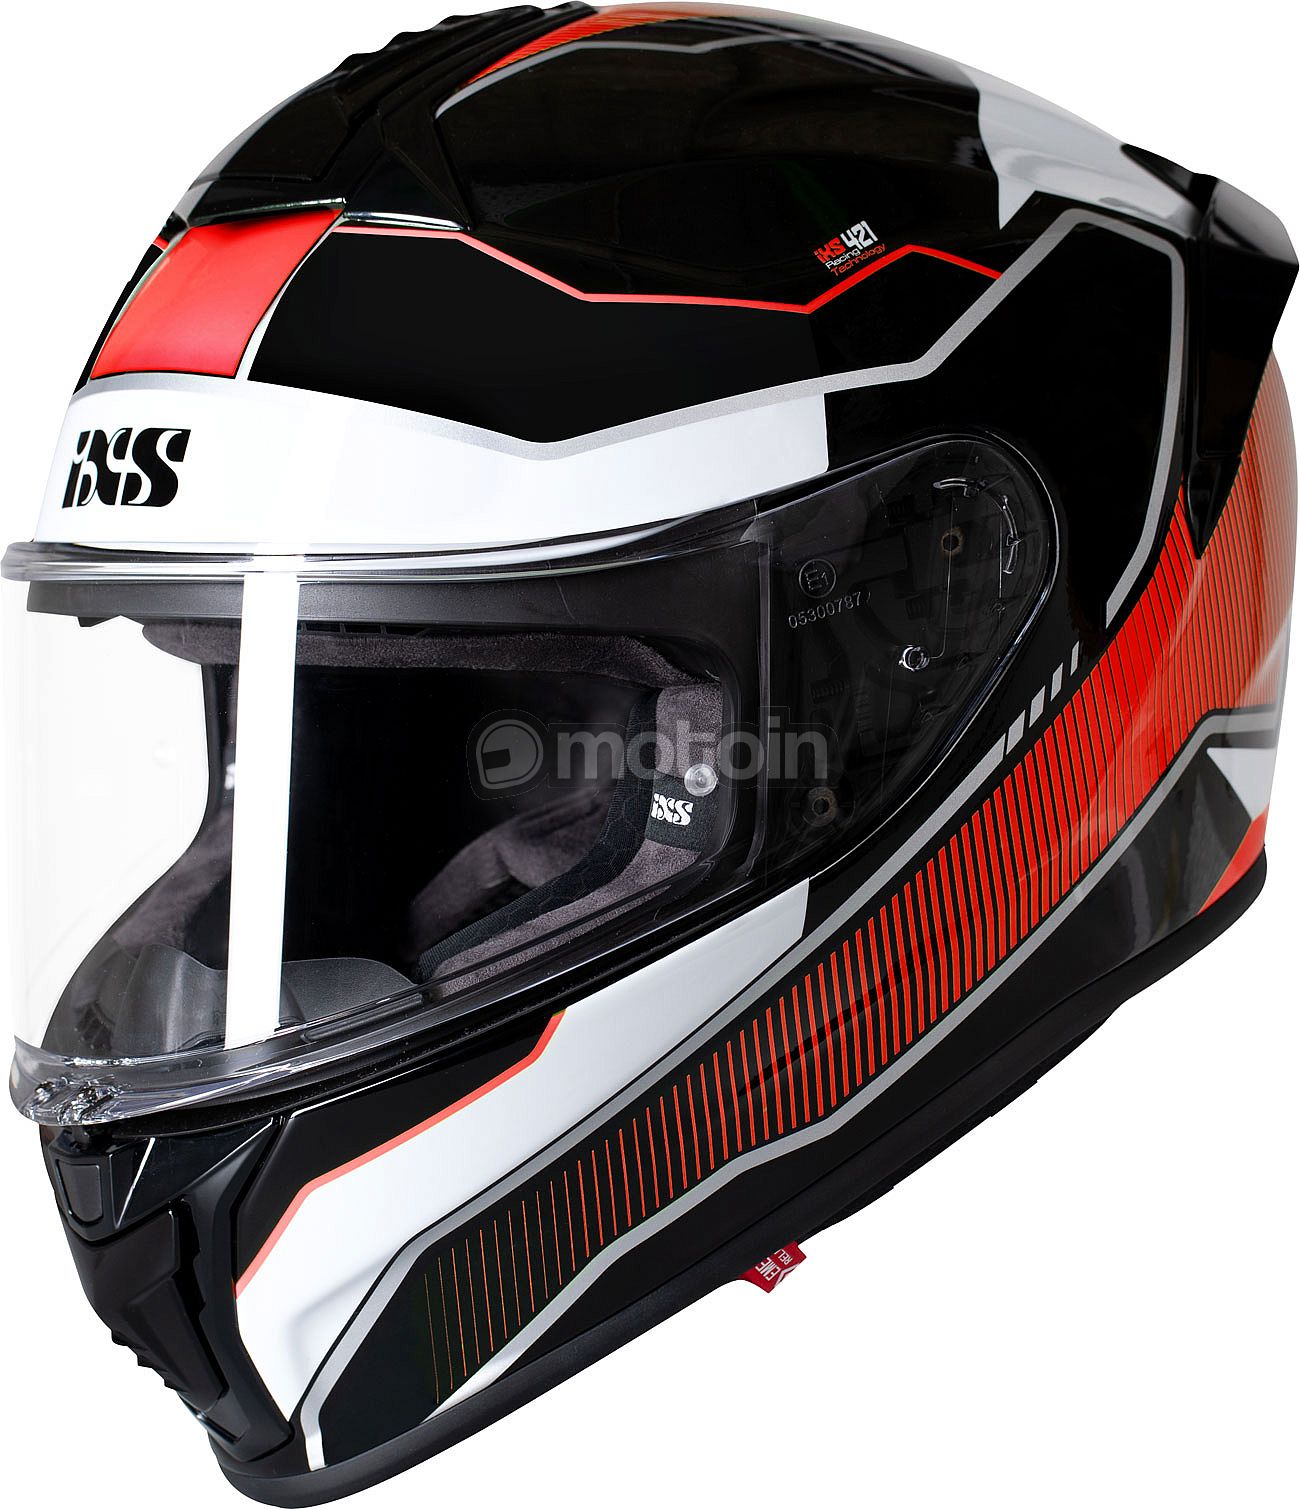 IXS 421 FG 2.1 MIPS, capacete integral